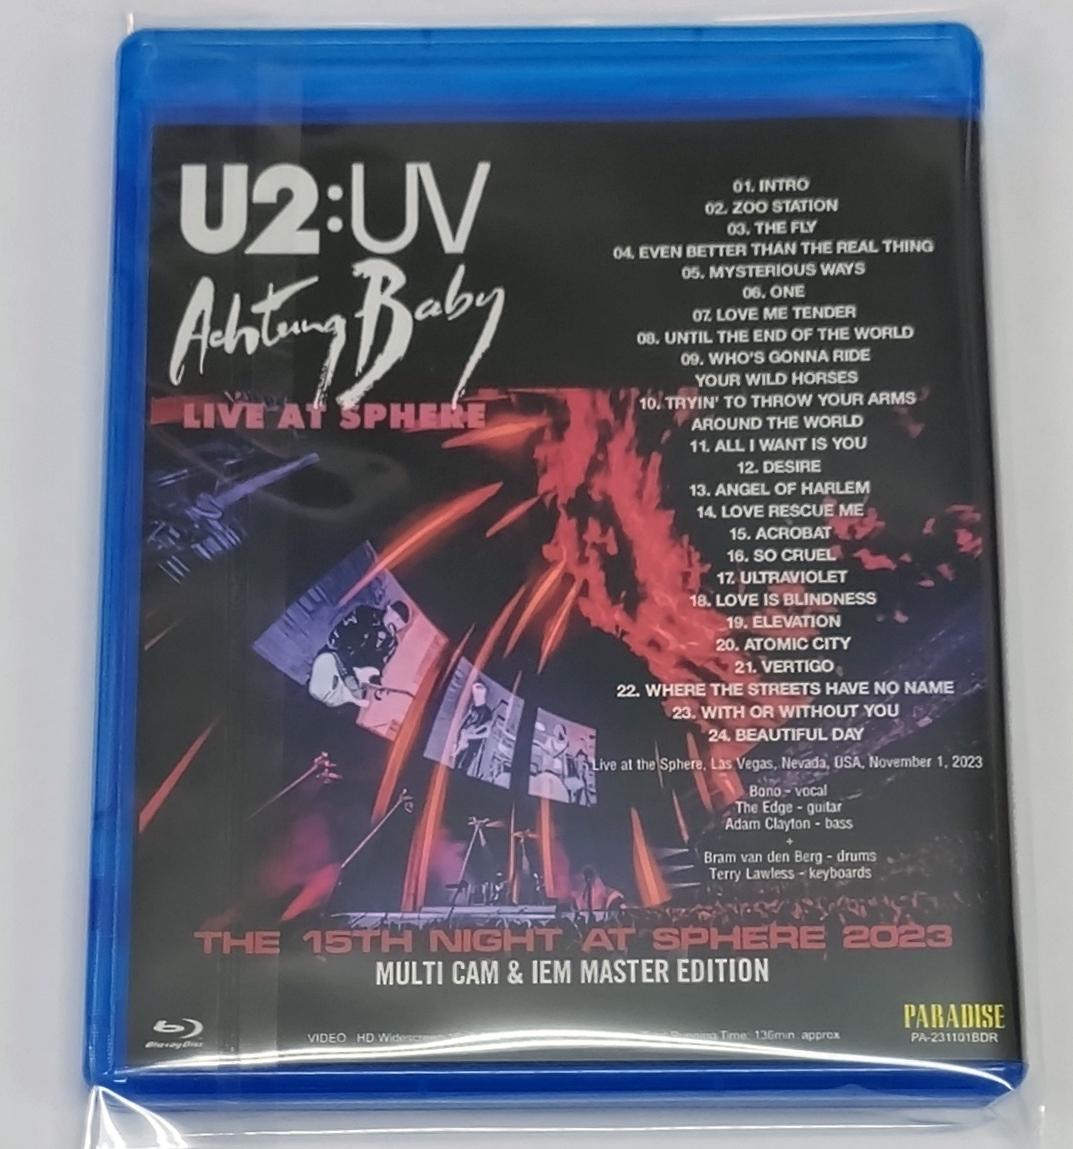 U2 / U2:UV ACHTUNG BABY - THE 15TH NIGHT AT SPHERE 2023 : MULTI CAM & IEM MASTER EDITION (BDR) 　_画像2